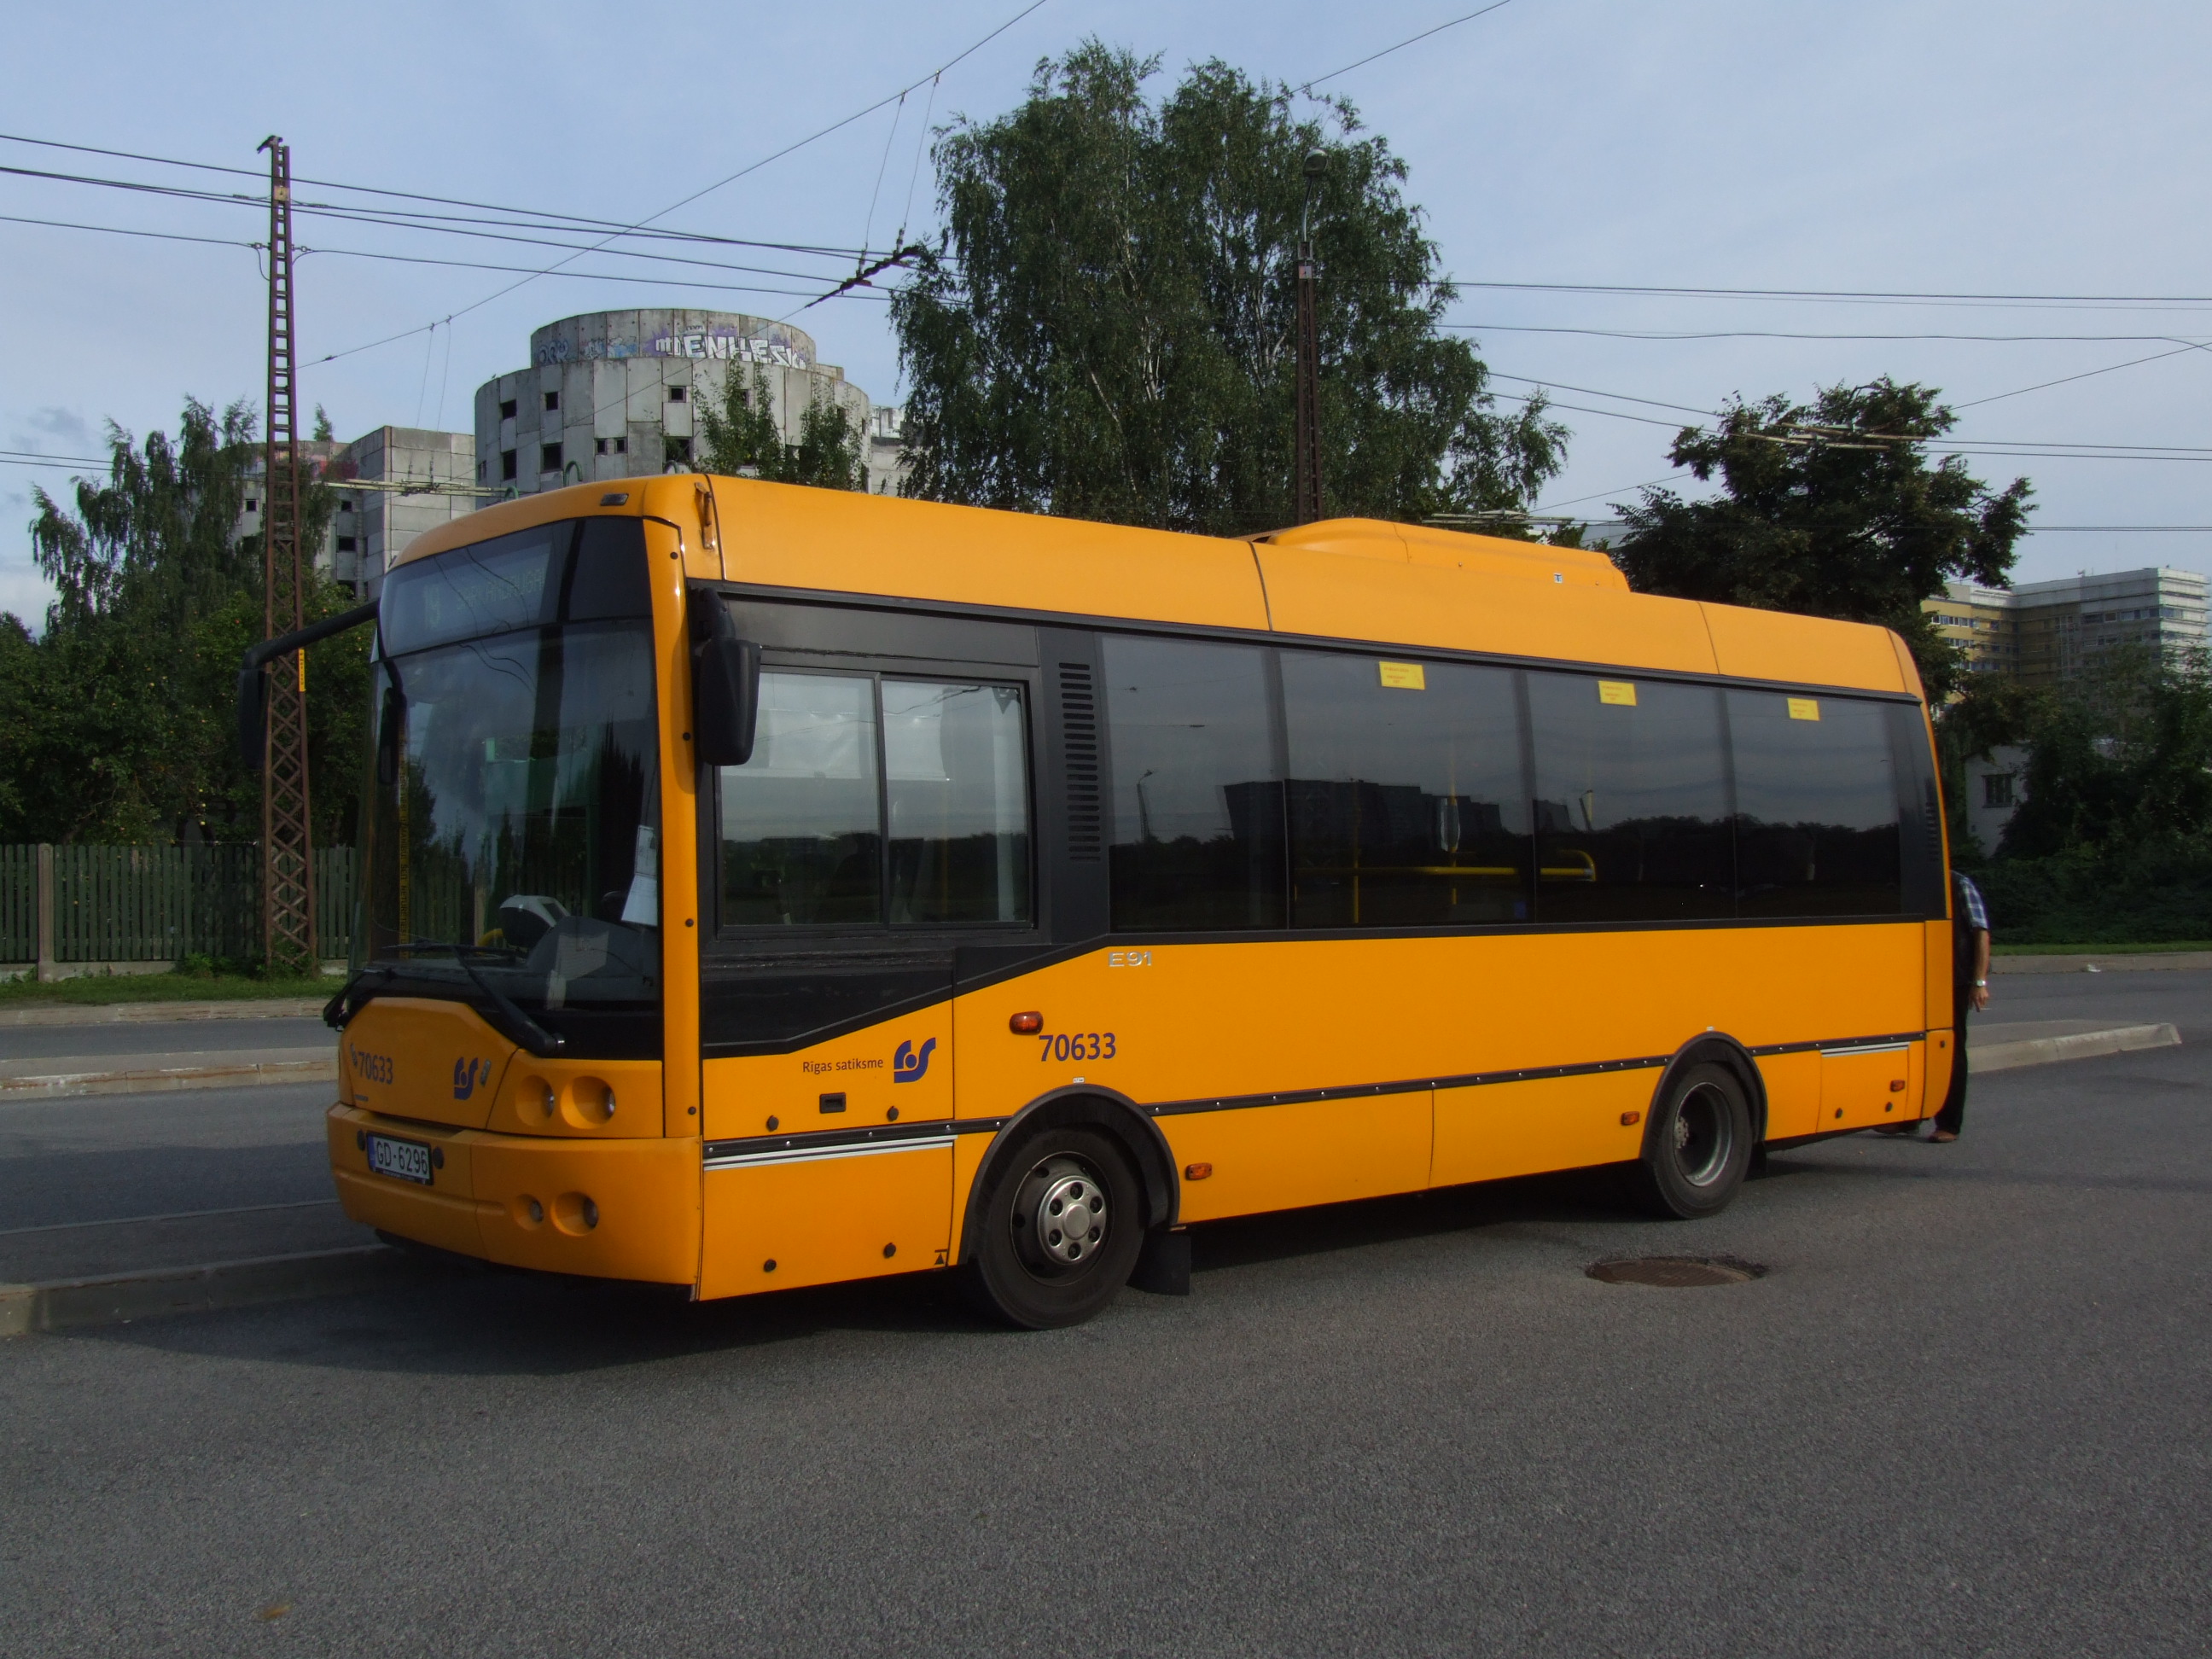 File:Ikarus bus.jpg - Wikimedia Commons